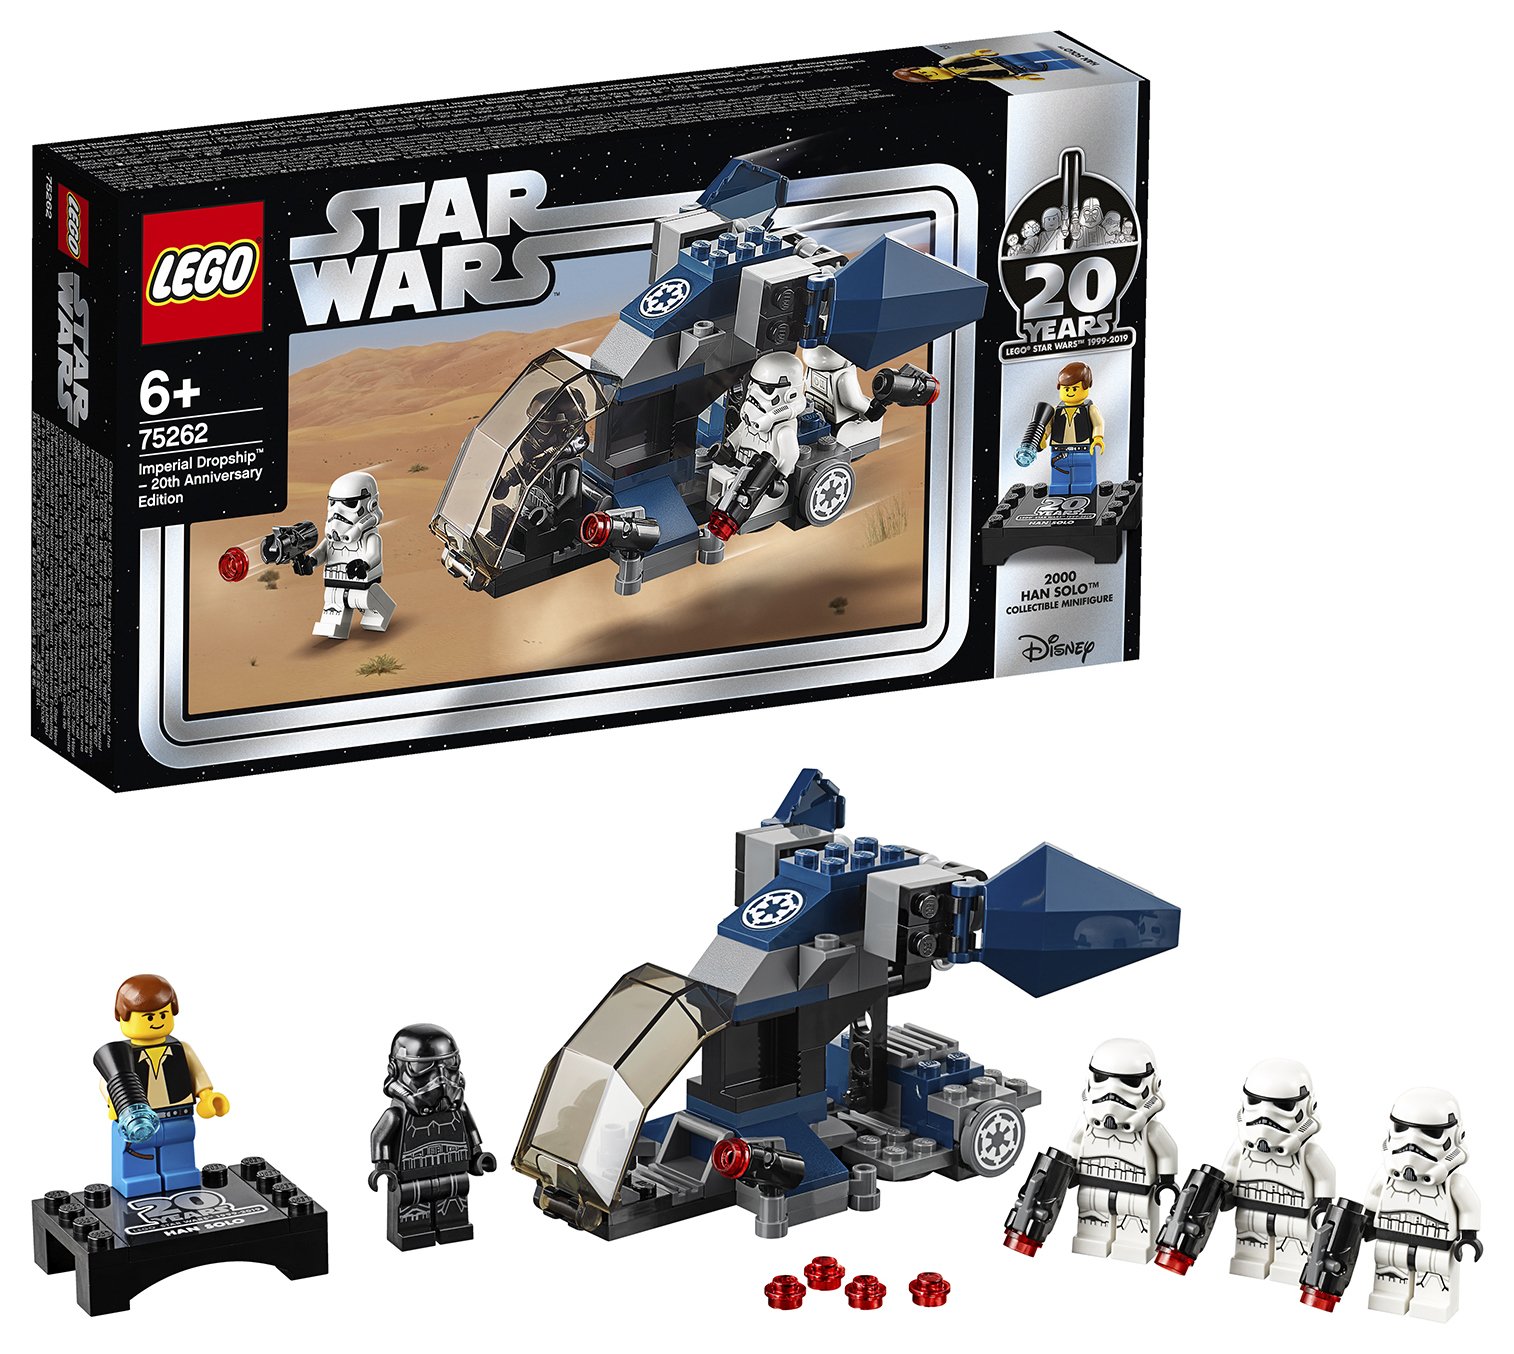 LEGO Star Wars Imperial Dropship 20th Anniversary Set- 75262